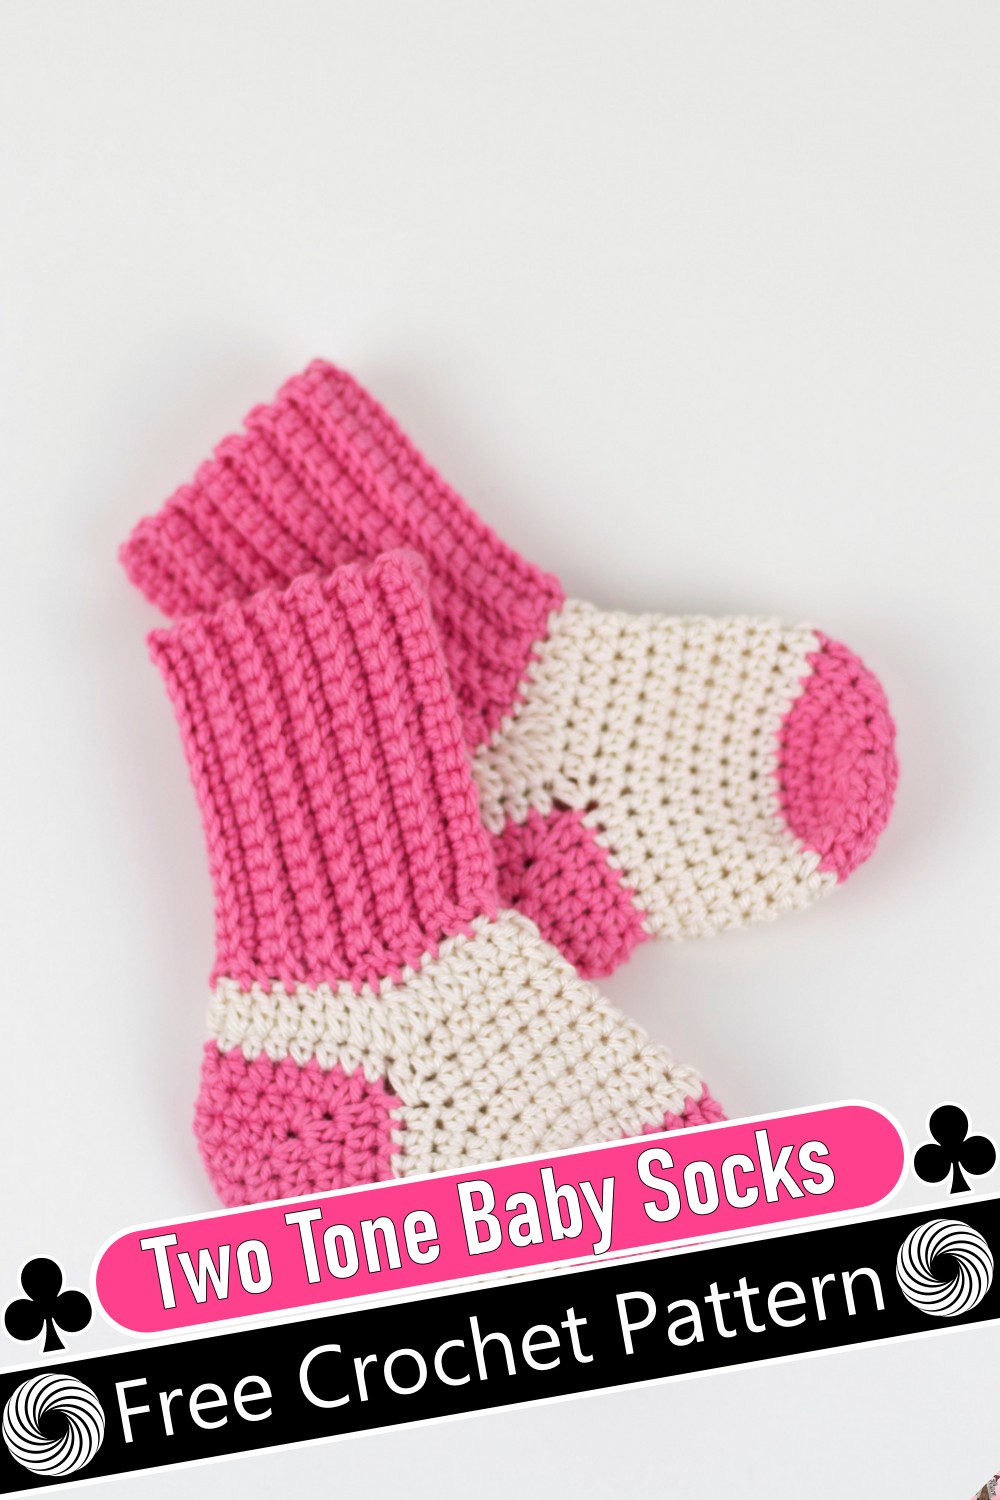 Two Tone Baby Socks